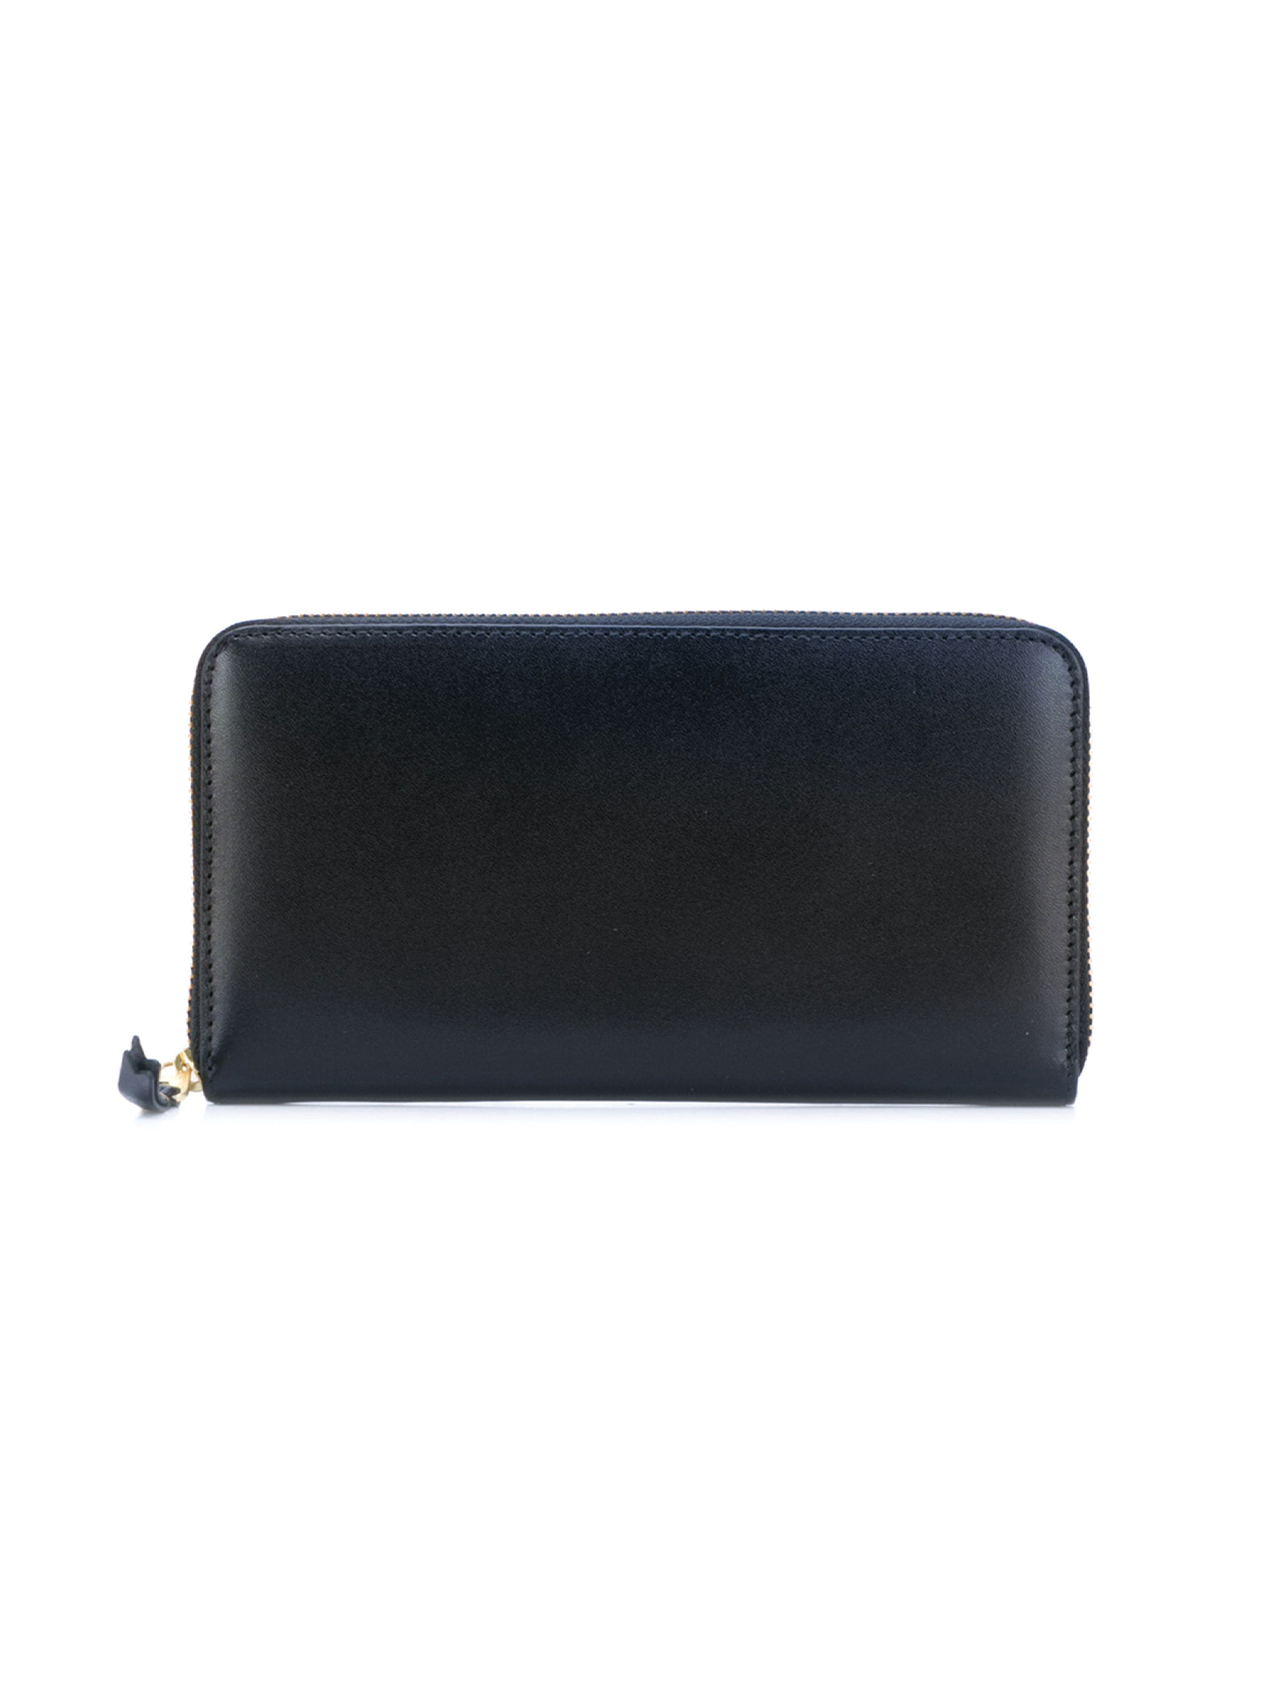 CDG Wallet Black Large Zip Wallet